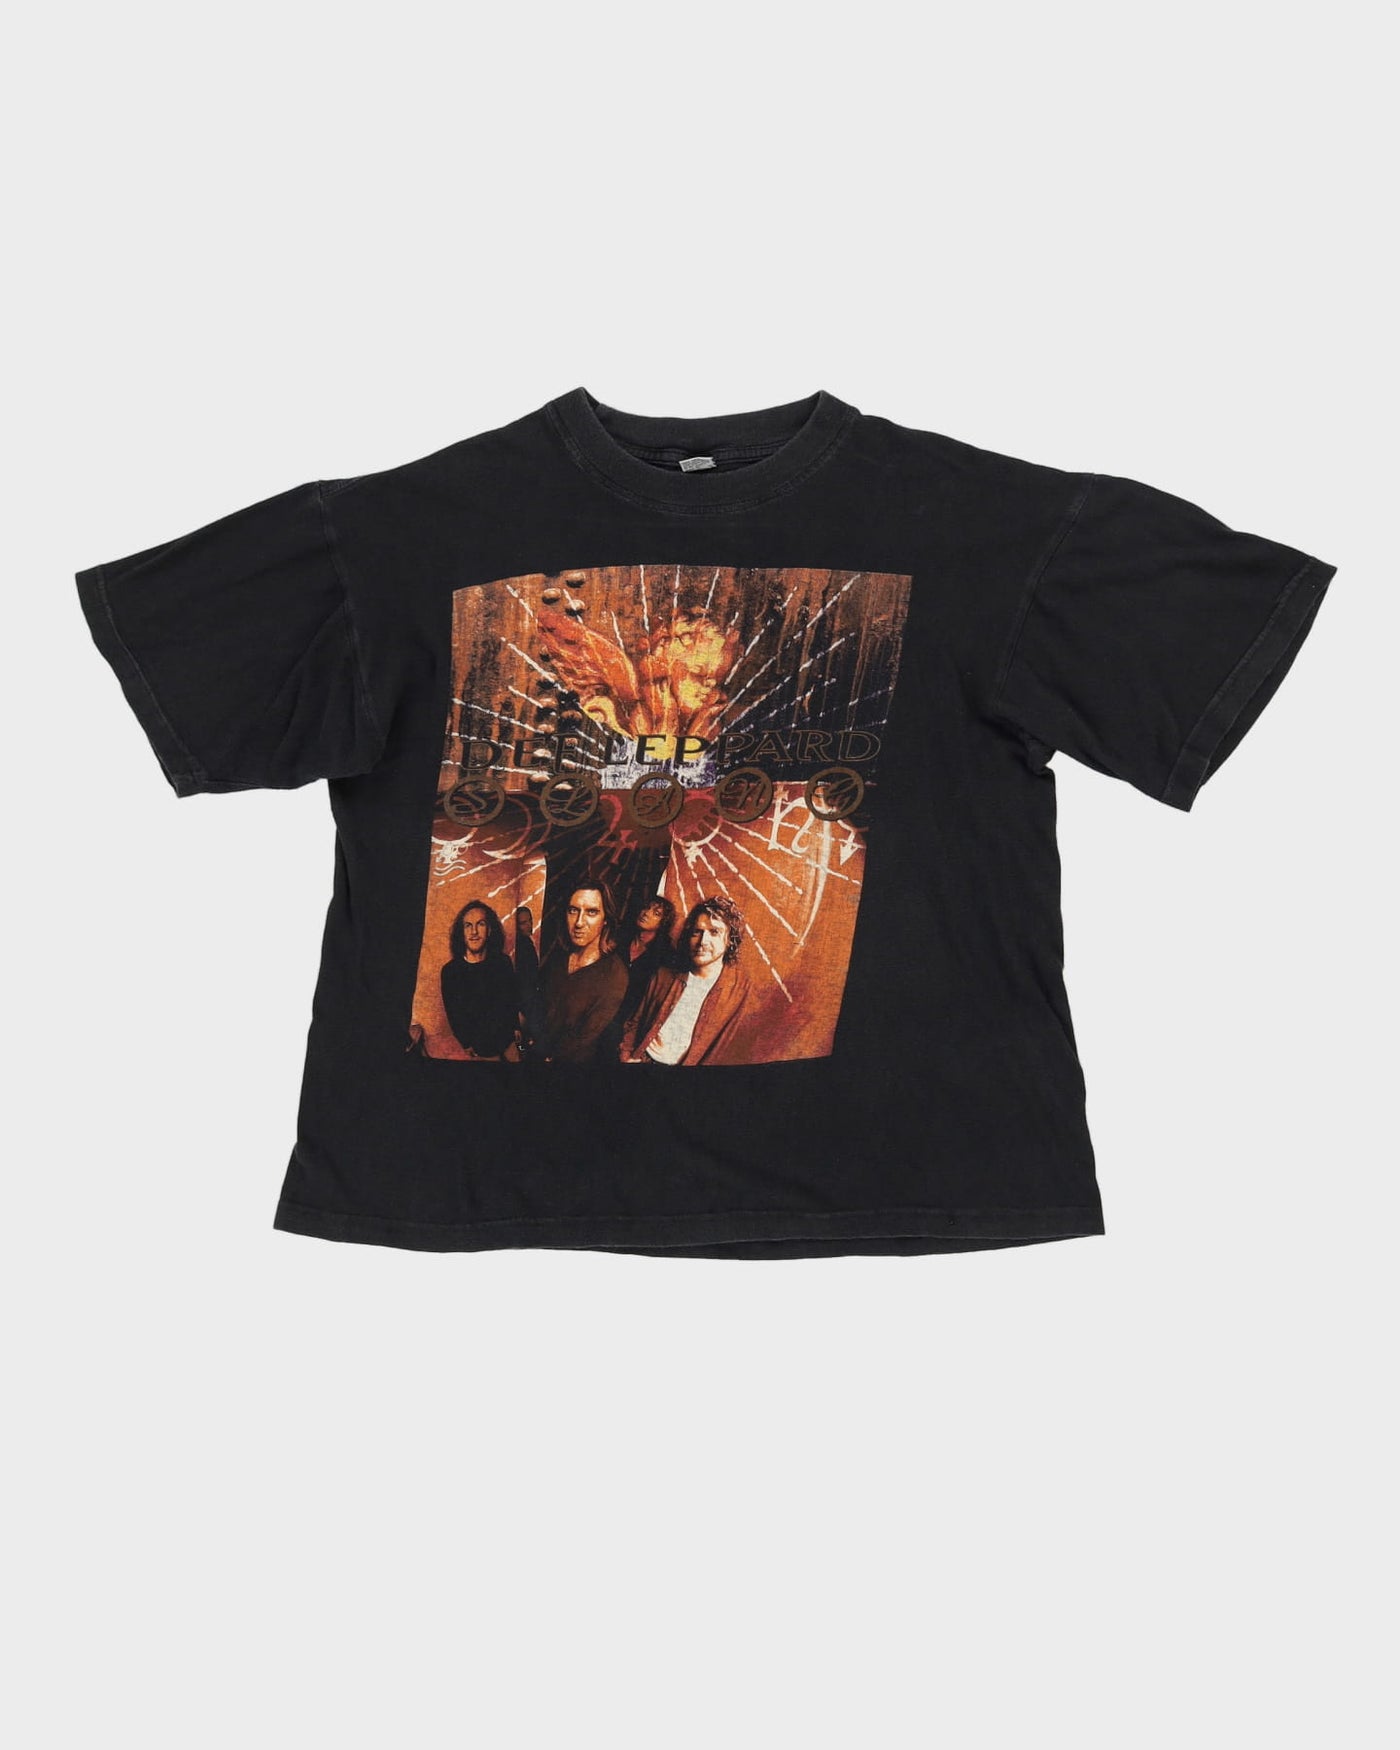 1996 Def Leppard Faded Black Band Tour Shirt - L / XL